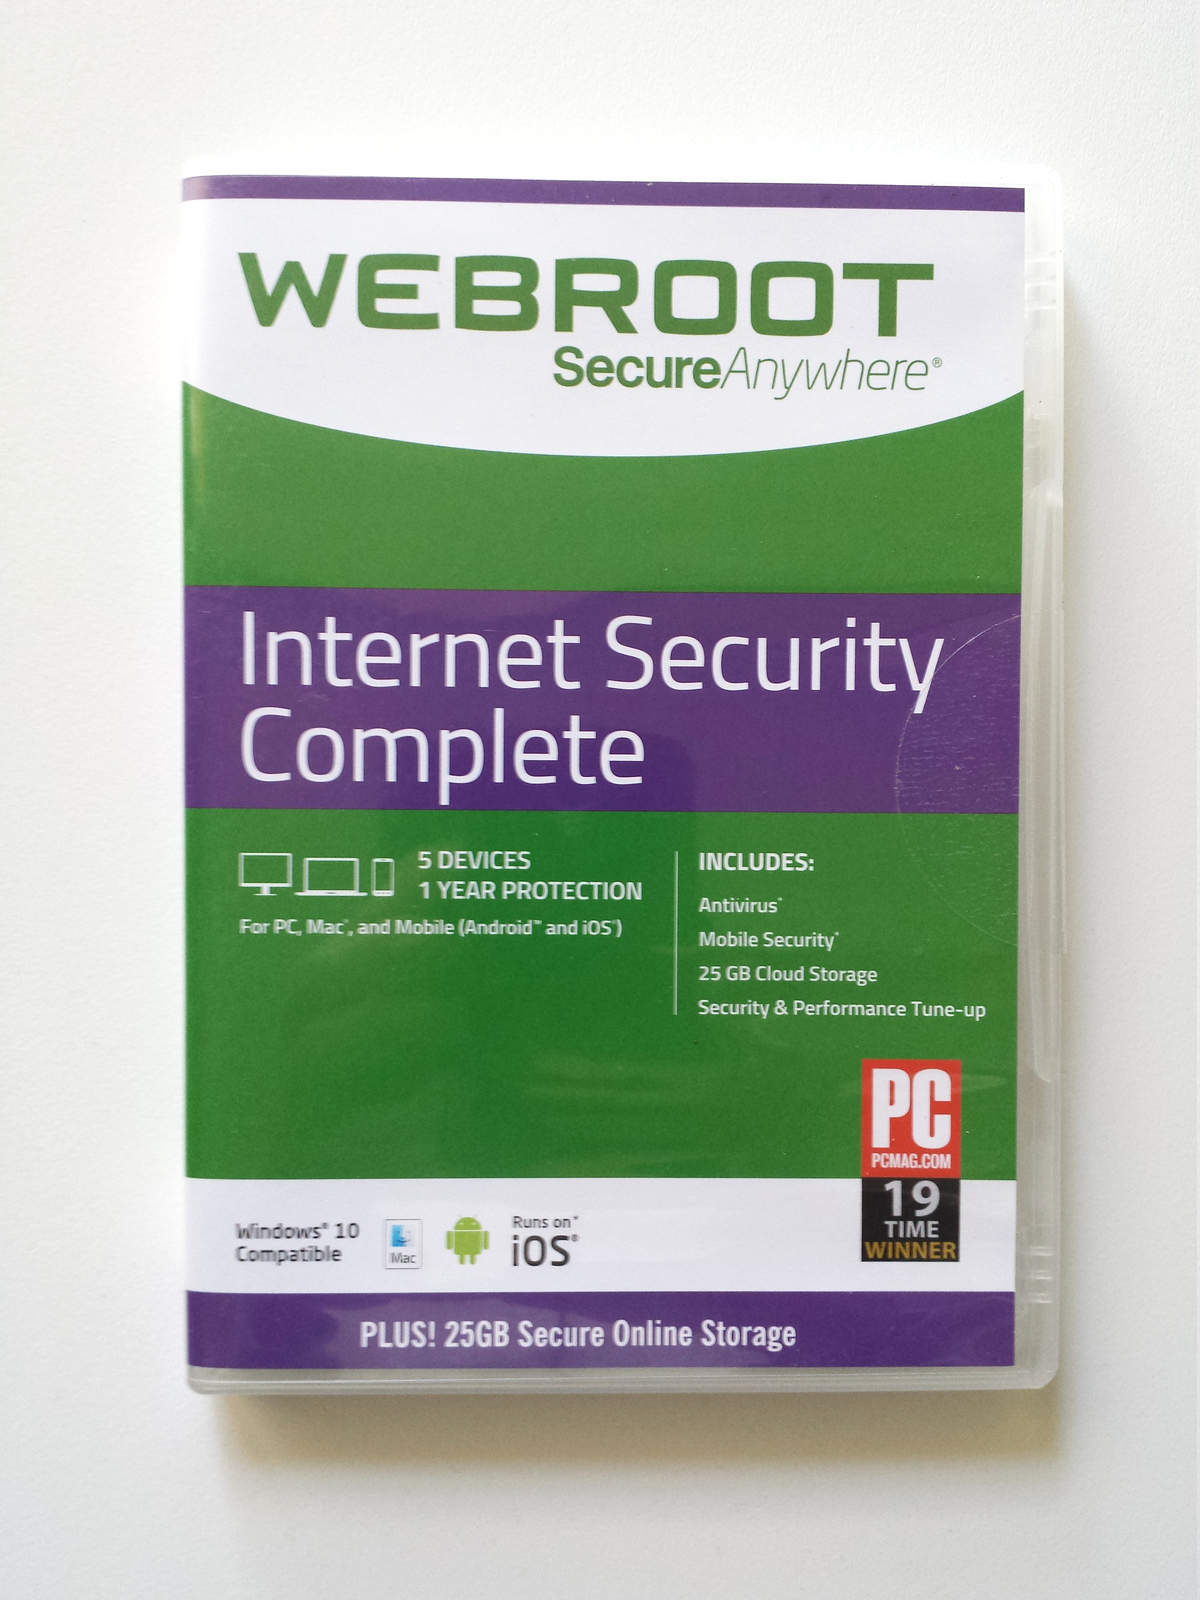 webroot internet security complete vs pro